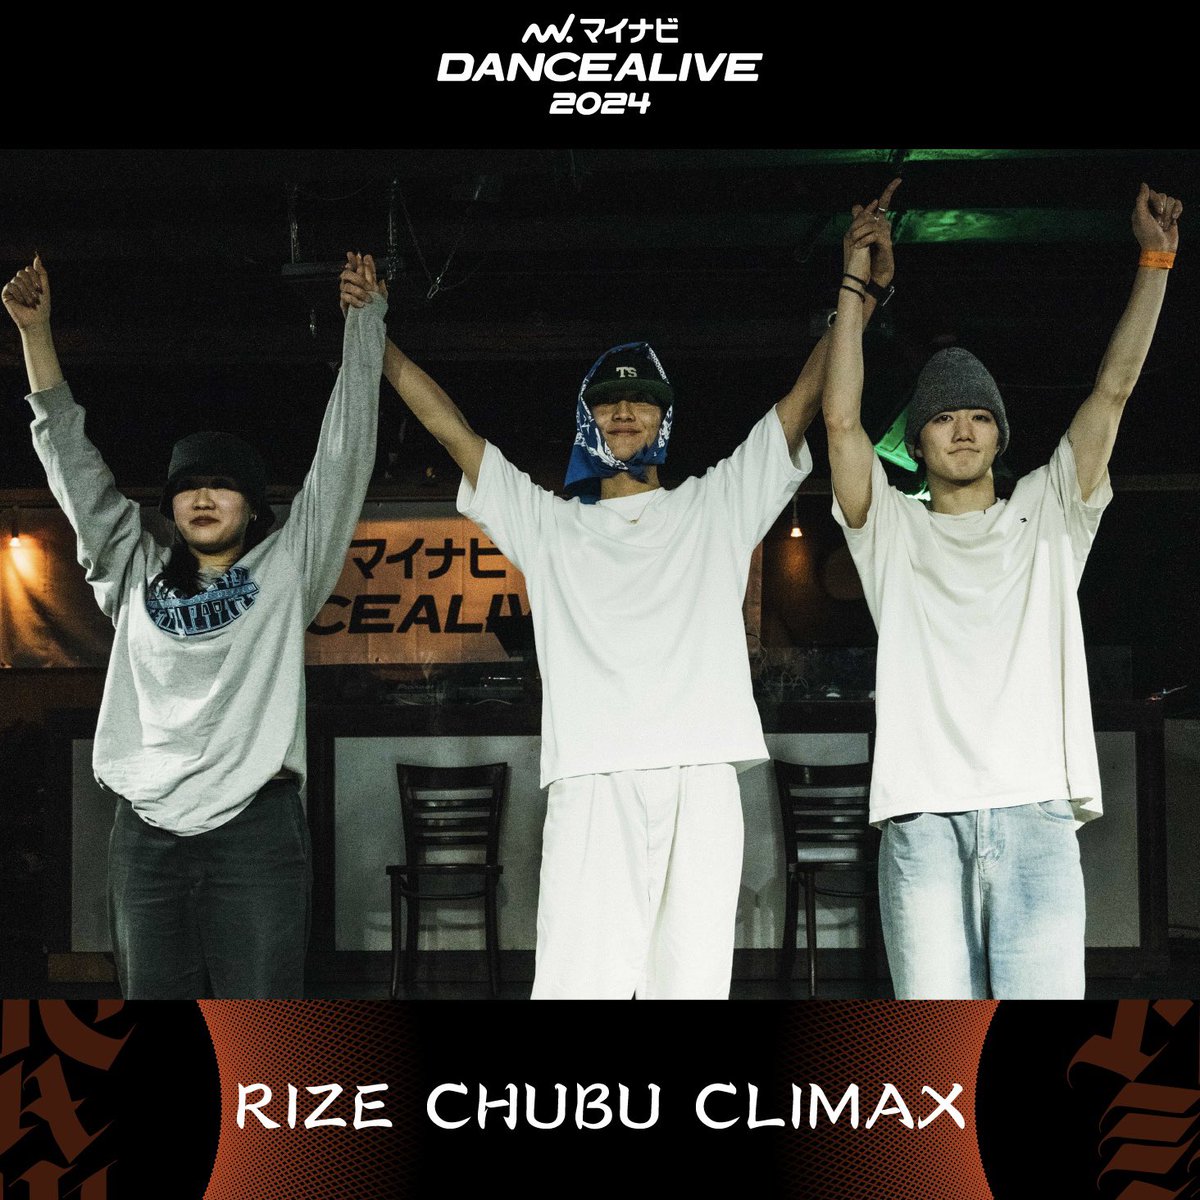 🌐🌐 RIZE CHUBU CLIMAX WINNER ⁡ 〜WINNER〜 adrenalineline ⁡ #マイナビダンスアライブ #dancealive #AlwaysYouth